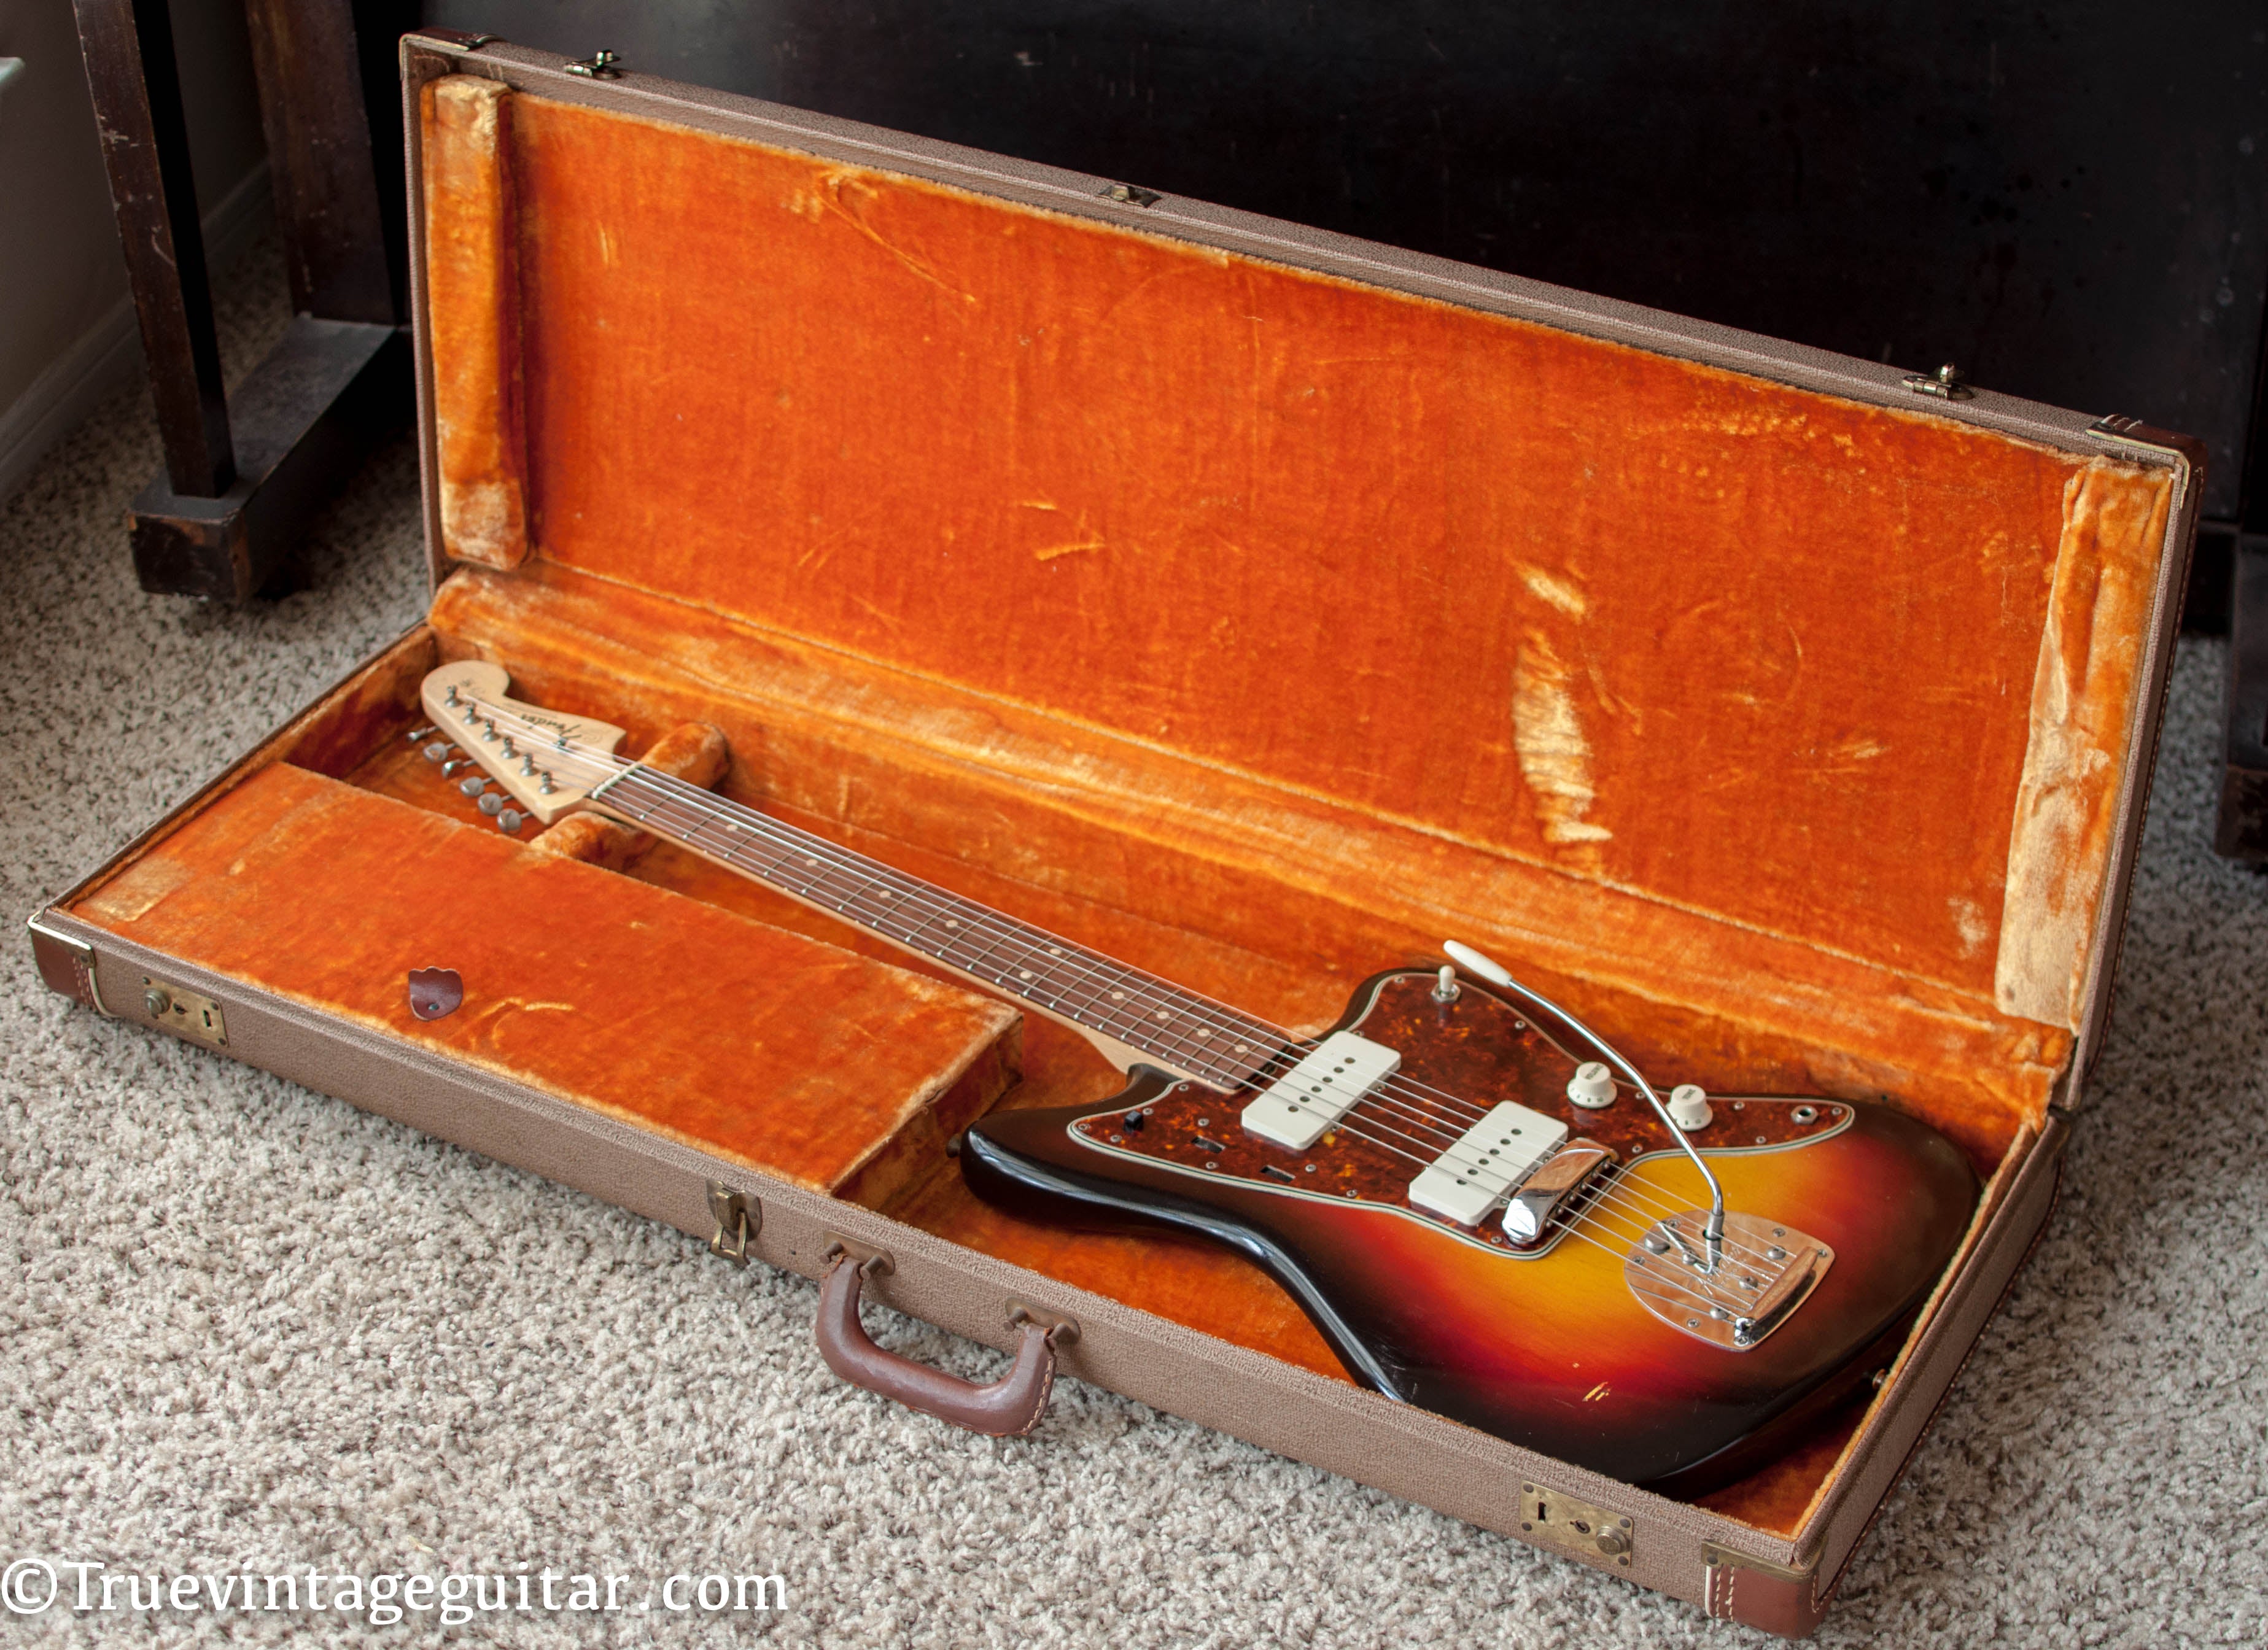 1961 Fender Jazzmaster vintage guitar in original case